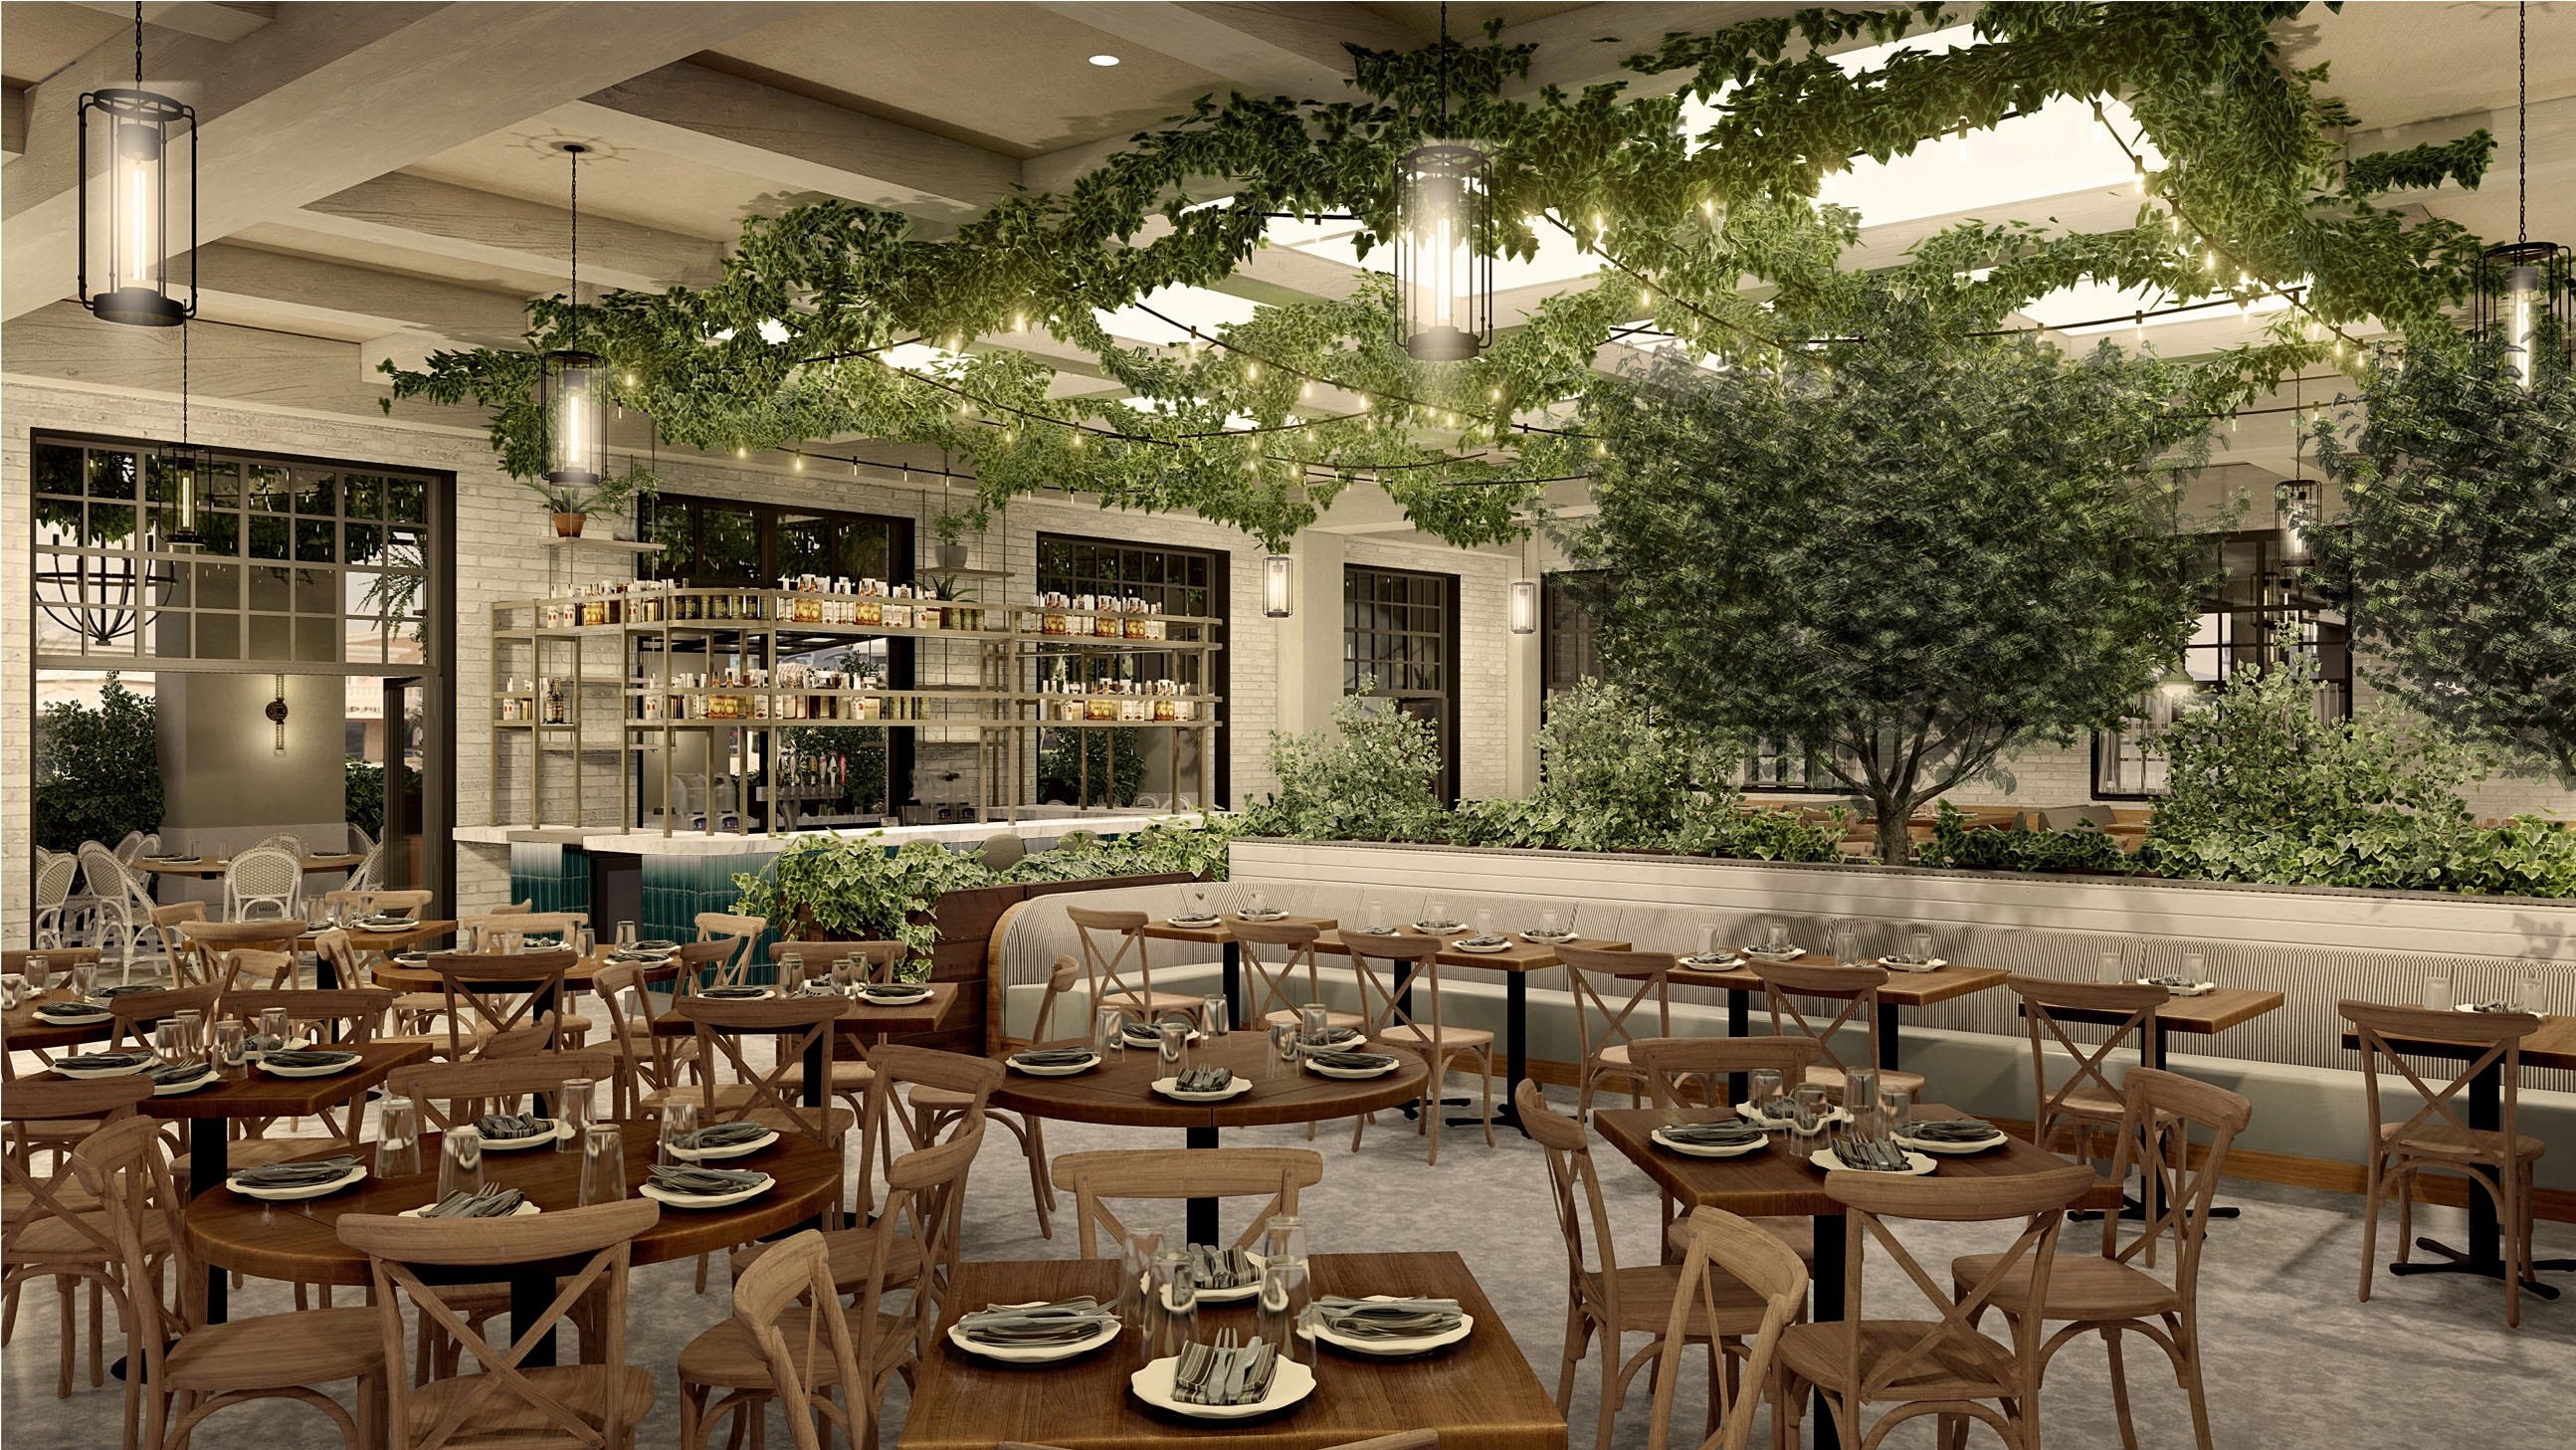 Maple & Ash team to open new Italian restaurant at Scottsdale Quarter